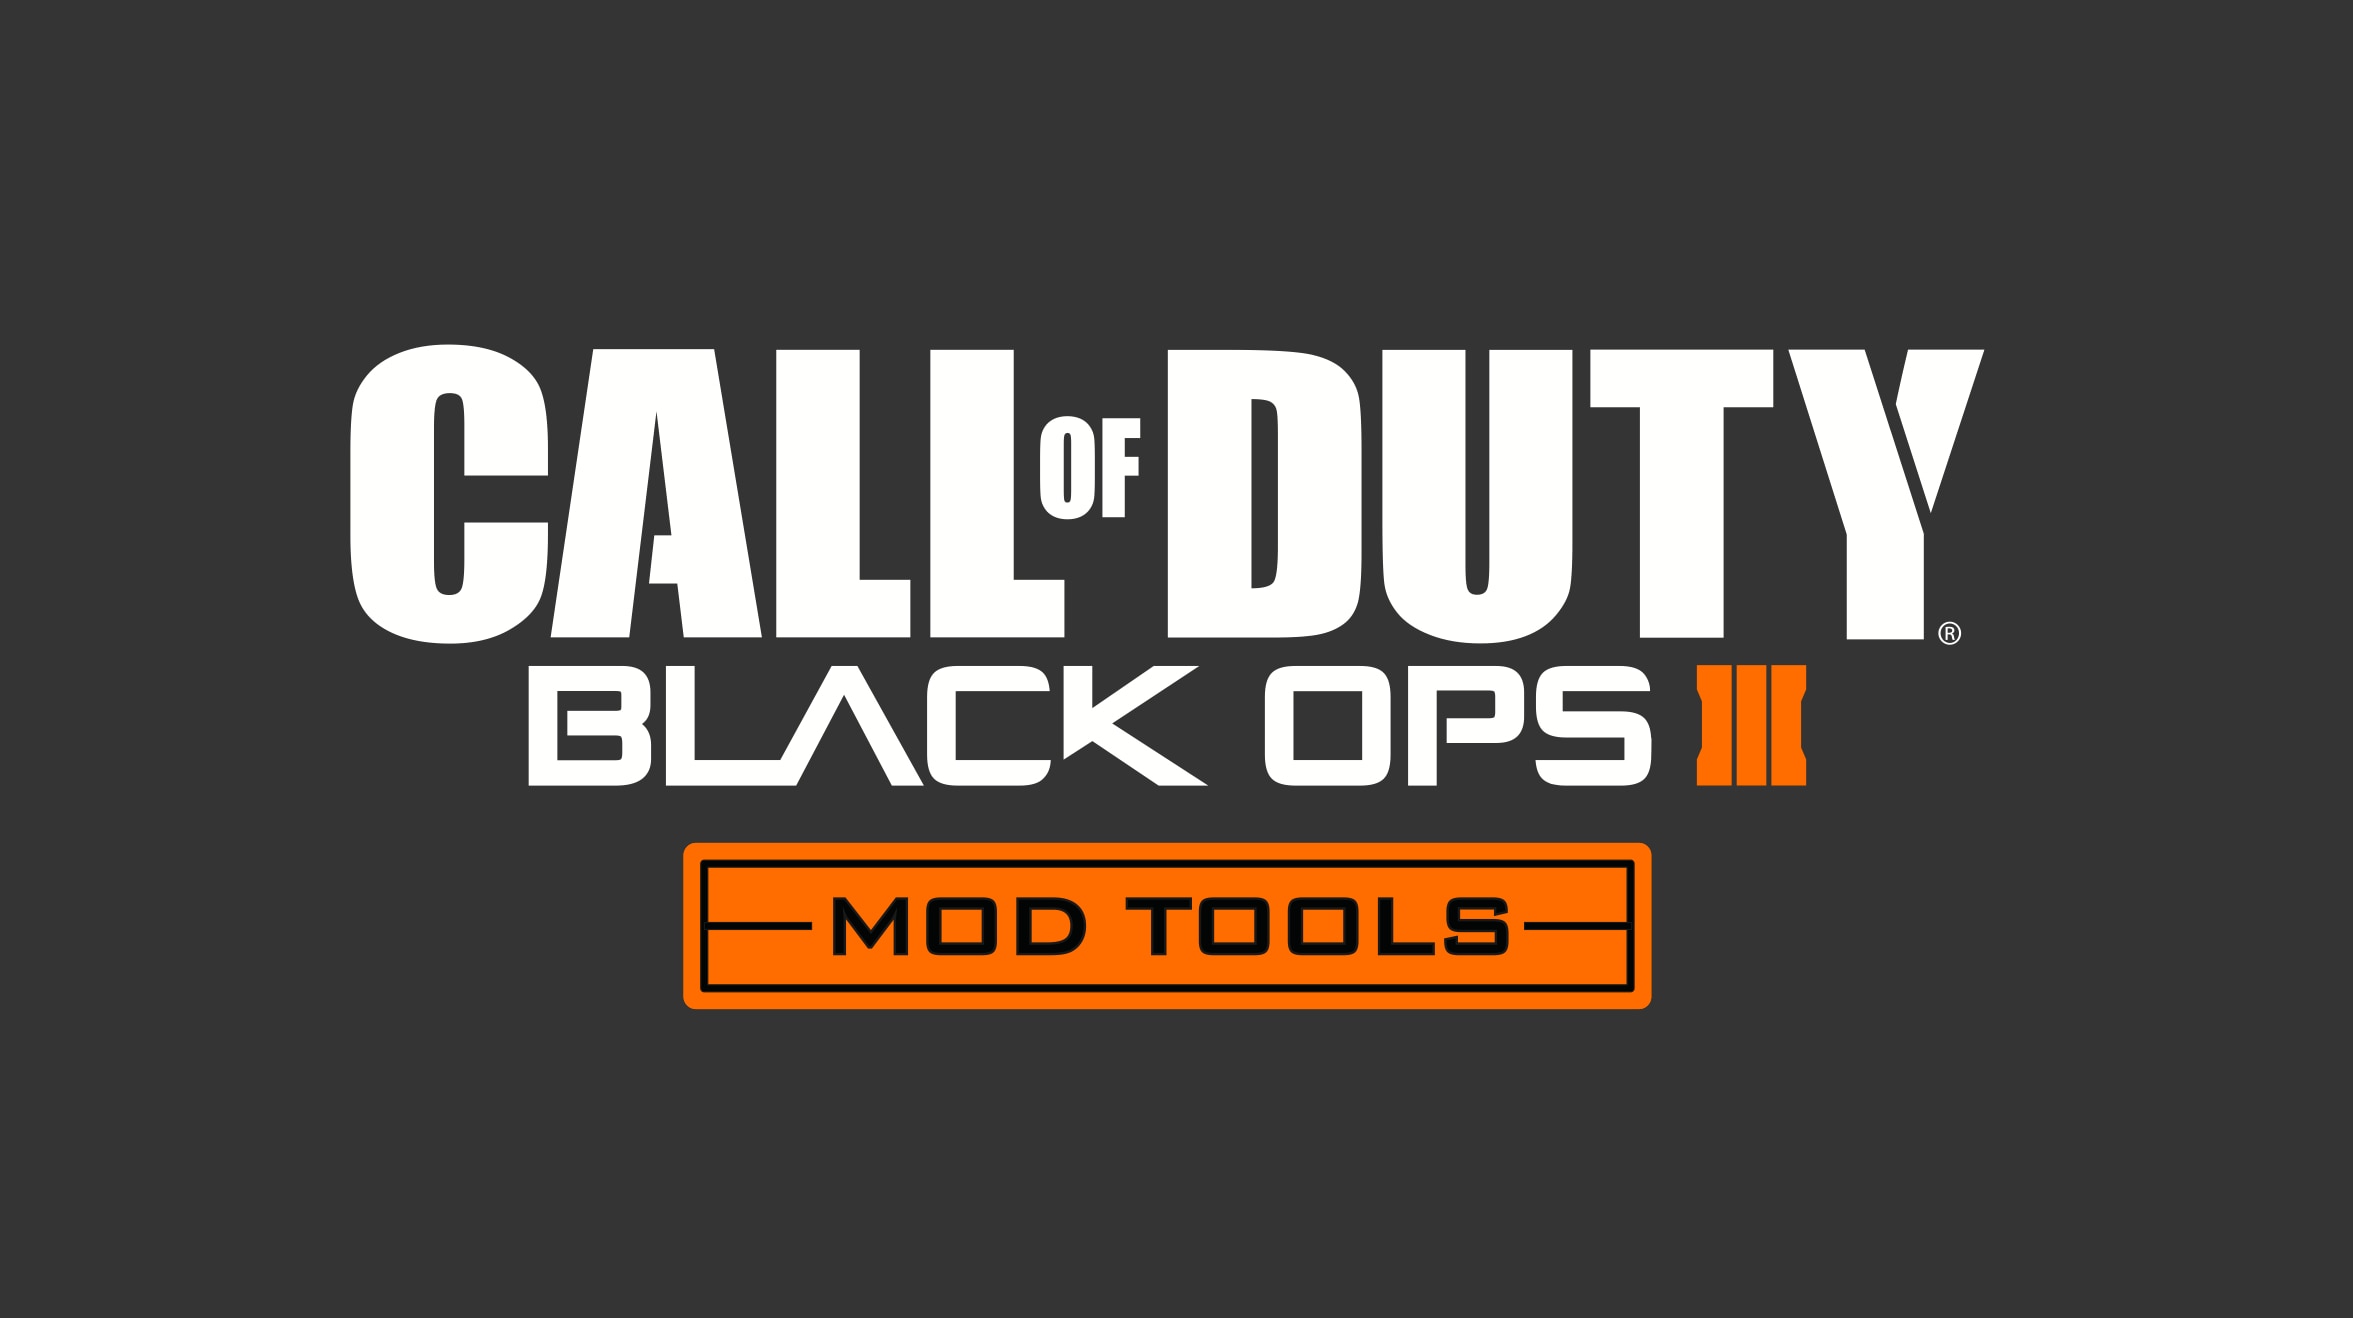 Black ops 3 Mod Tools. Health Bar Call of Duty. Modding tools